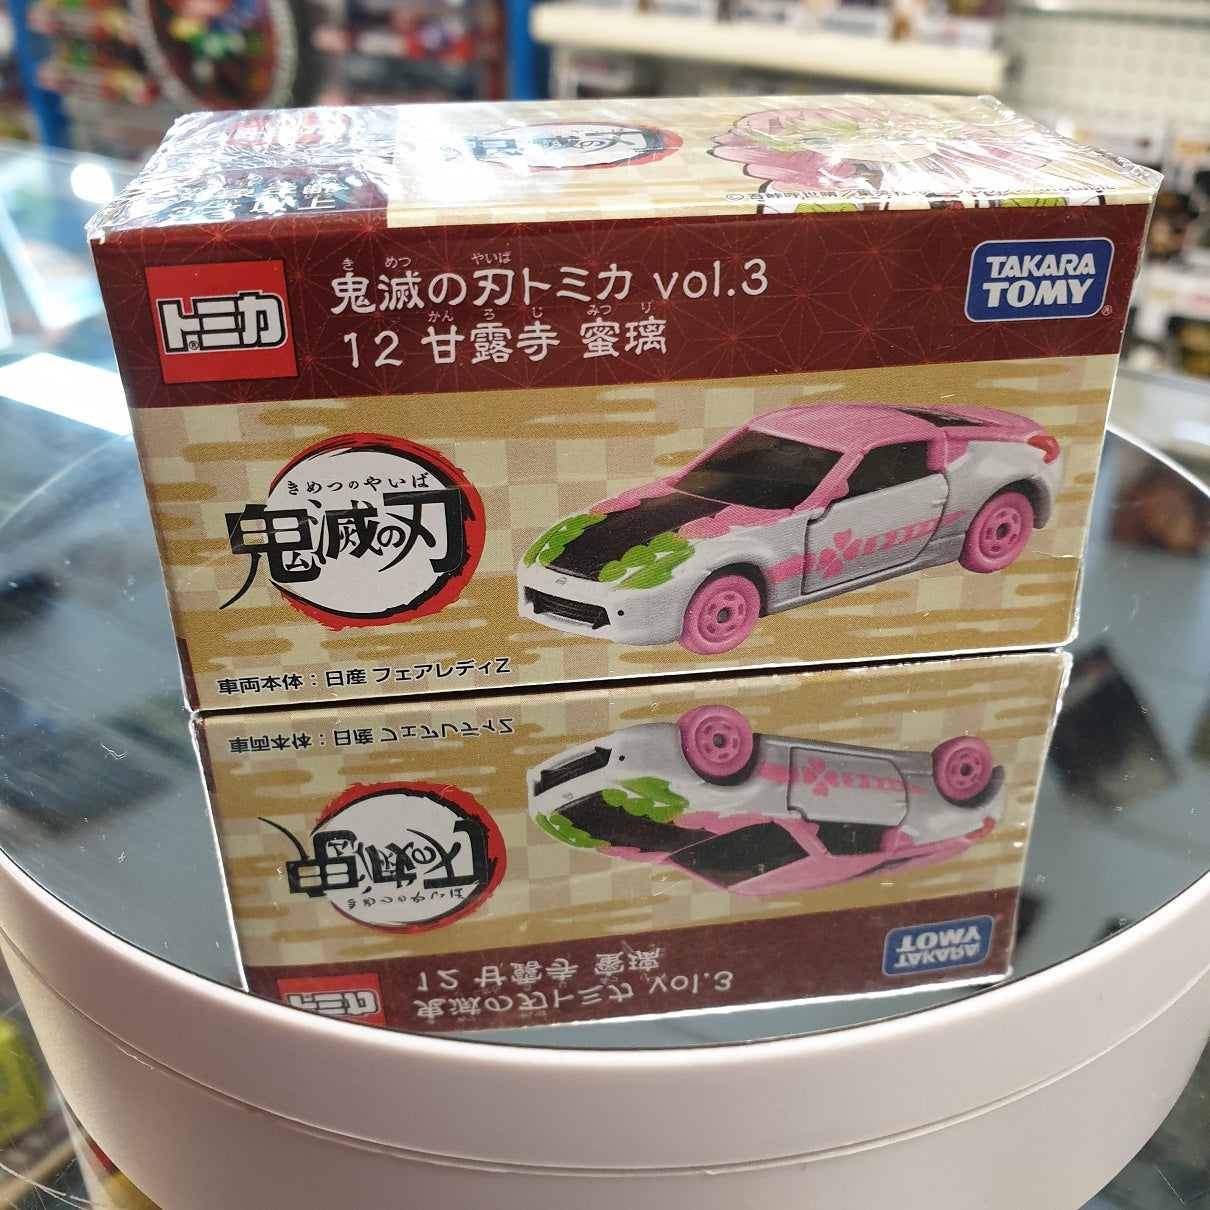 Takara Tomy Tomica - Nissan Fairlady Z Anime Diecast Car